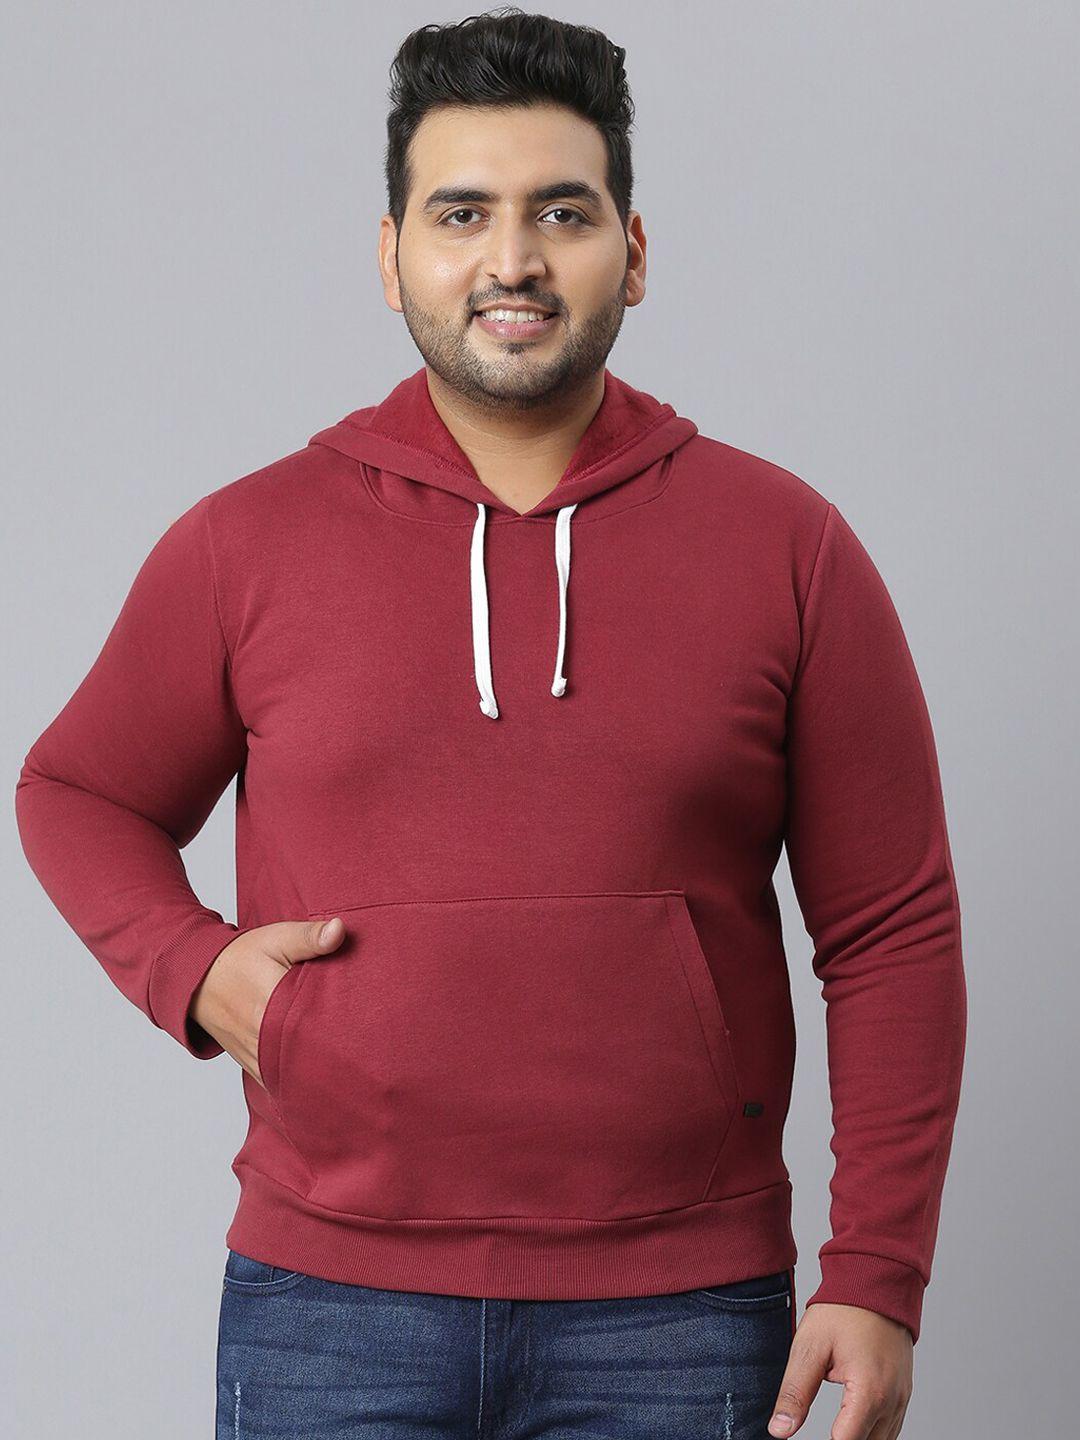 instafab-plus-men-plus-size-maroon-hooded-sweatshirt